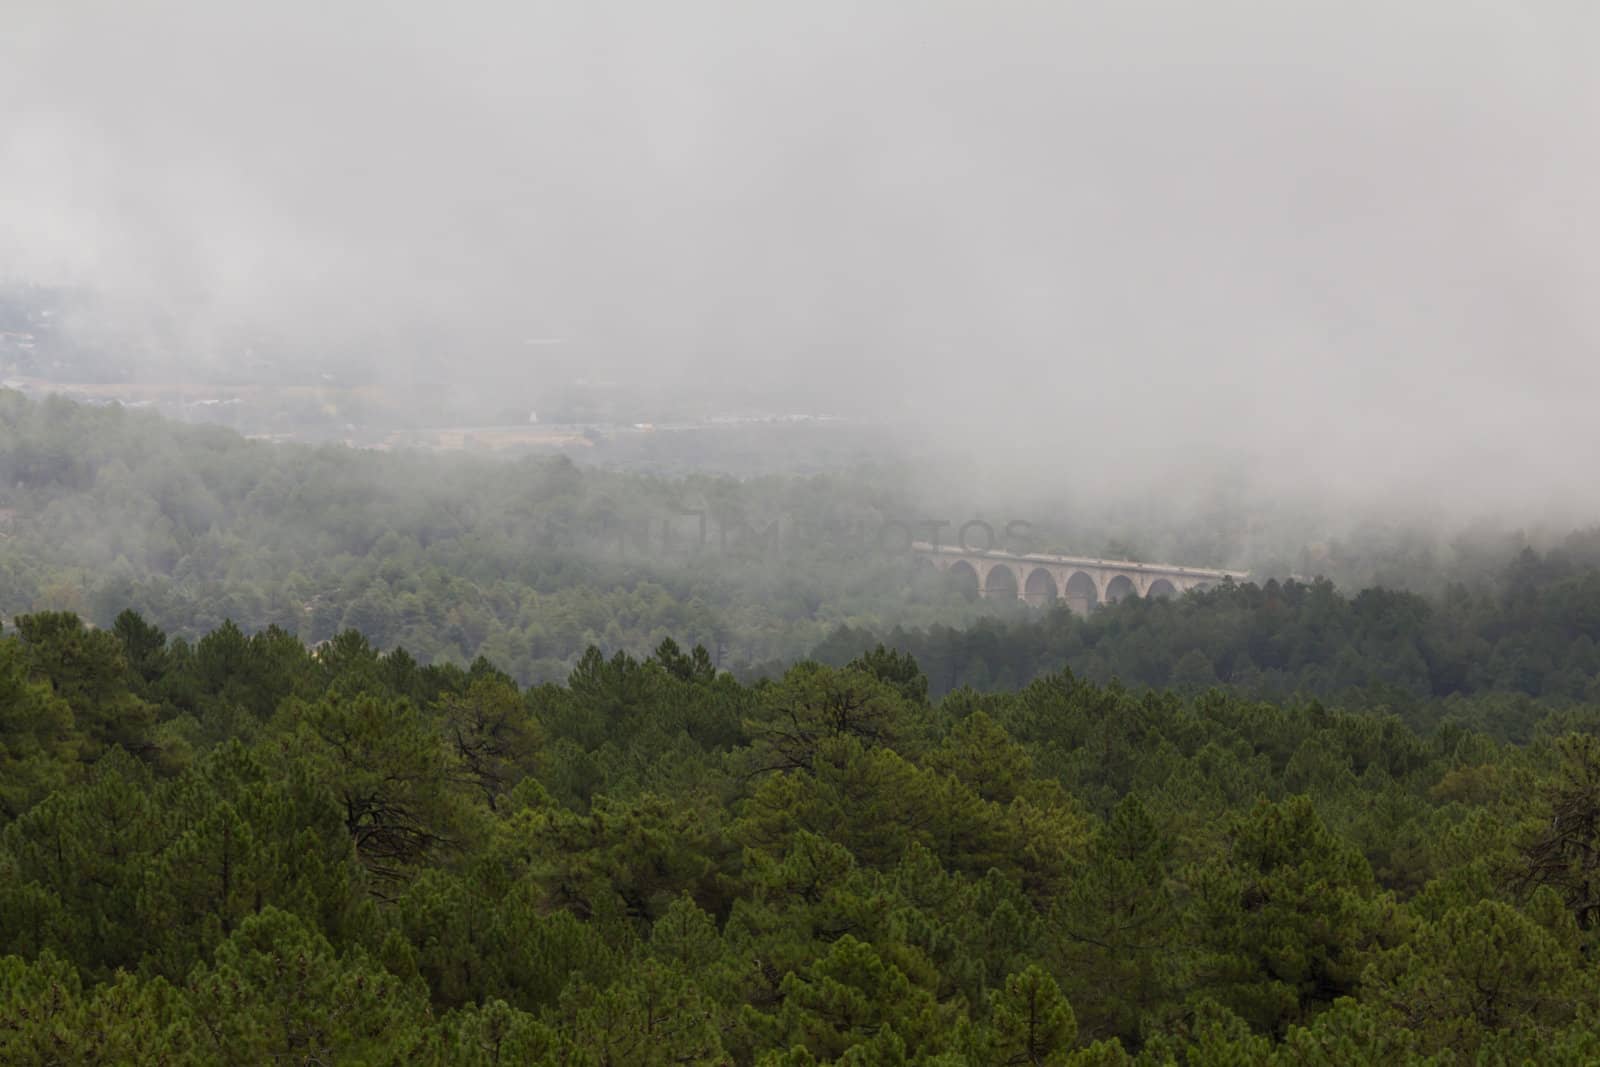 Bridge in the fog by kyrien